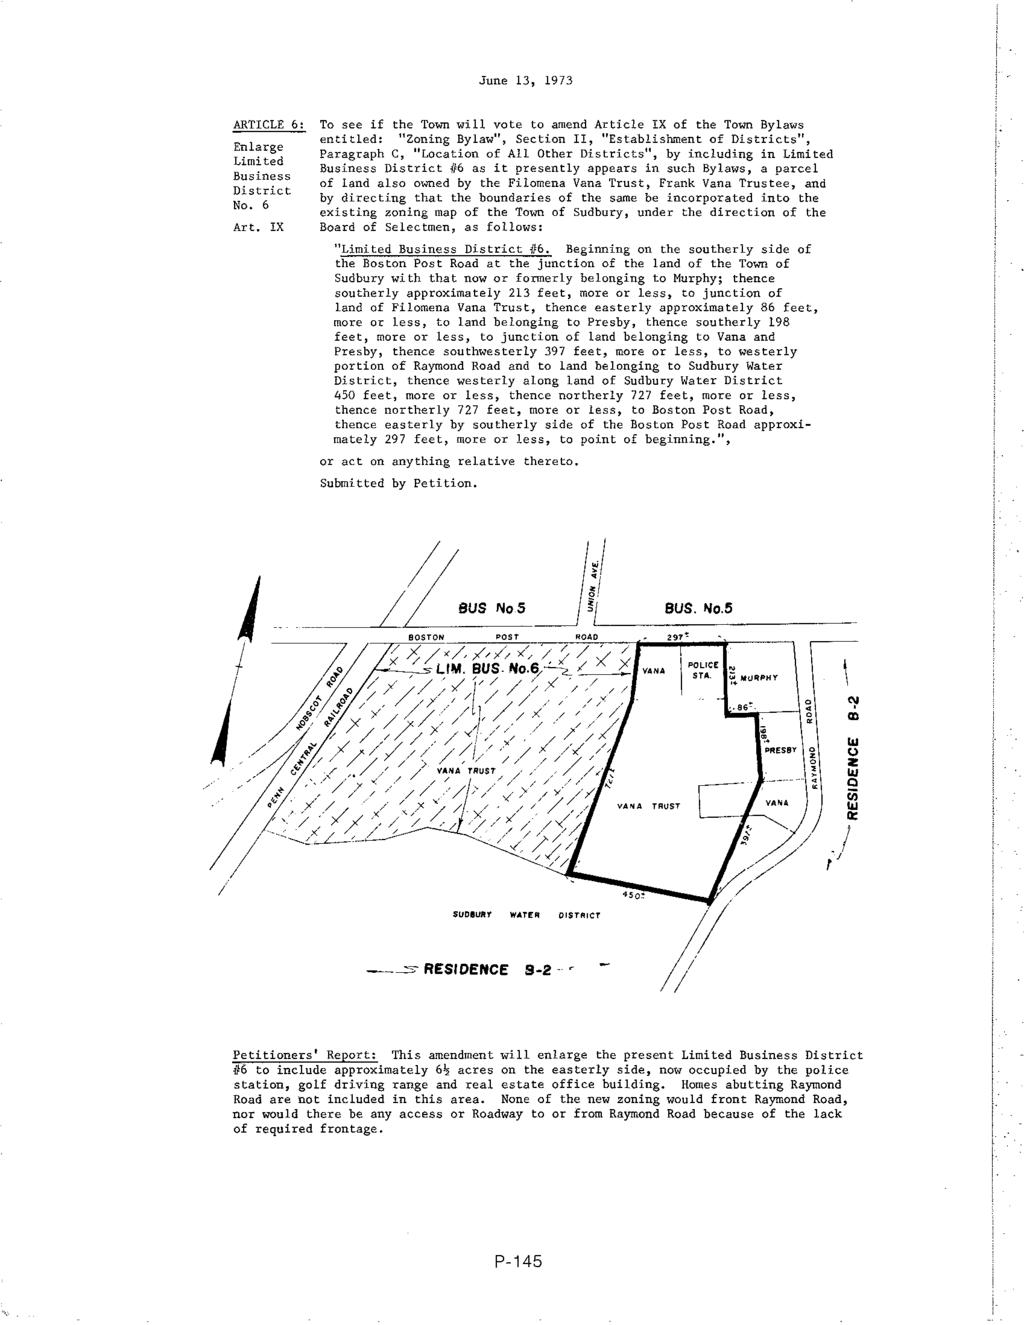 June 13, 1973 ARTICLE 6: Enlarge Limited Business District No. 6 Art.